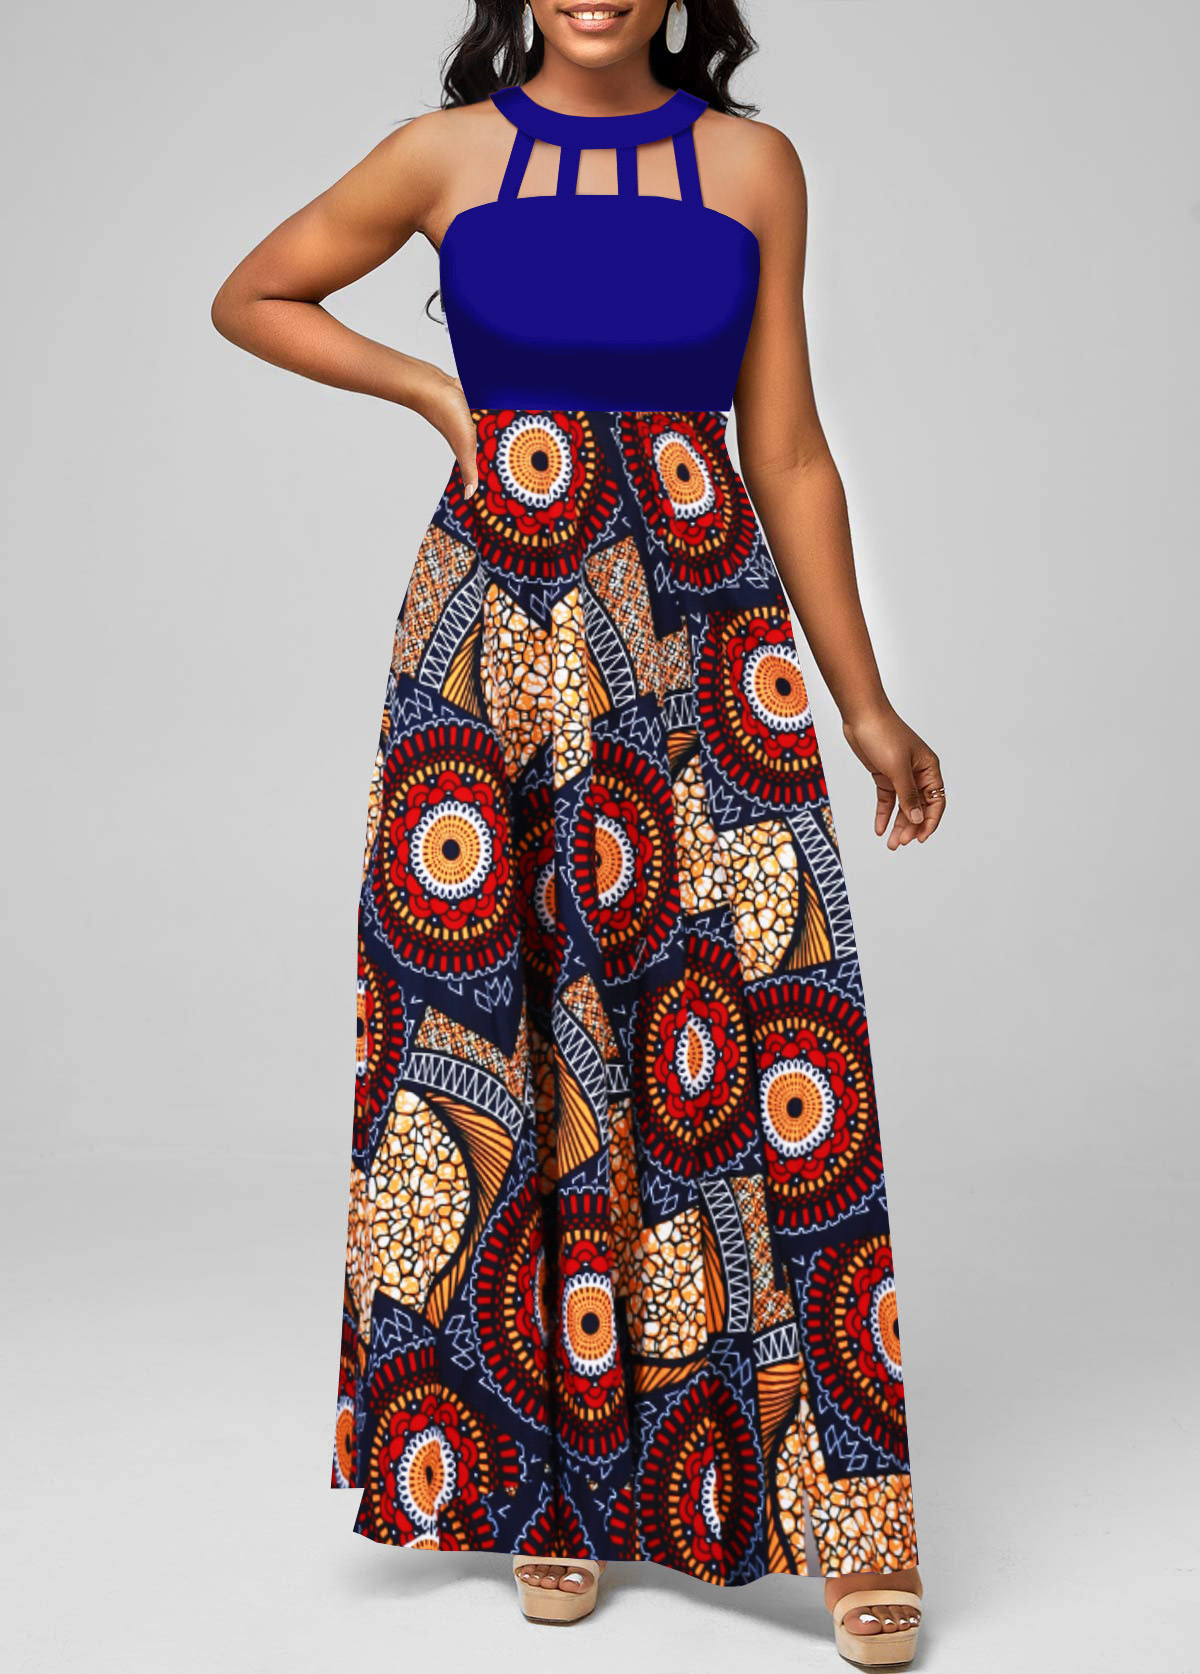 African Tribal Print Cage Neck Navy Sleeveless Maxi Dress